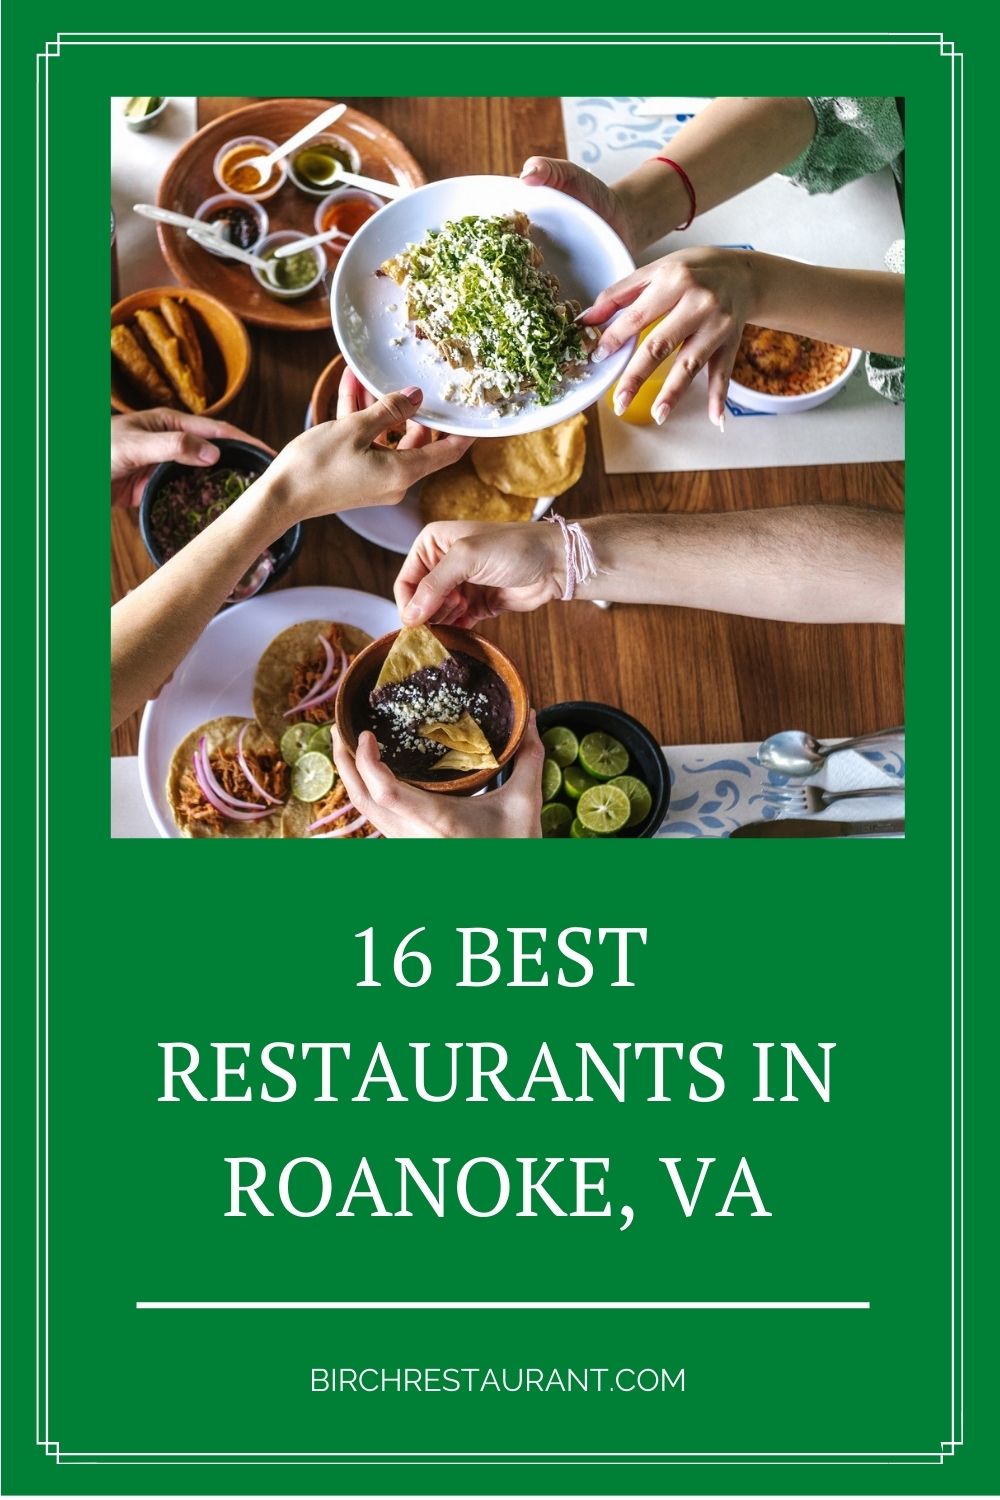 Best Restaurants in Roanoke